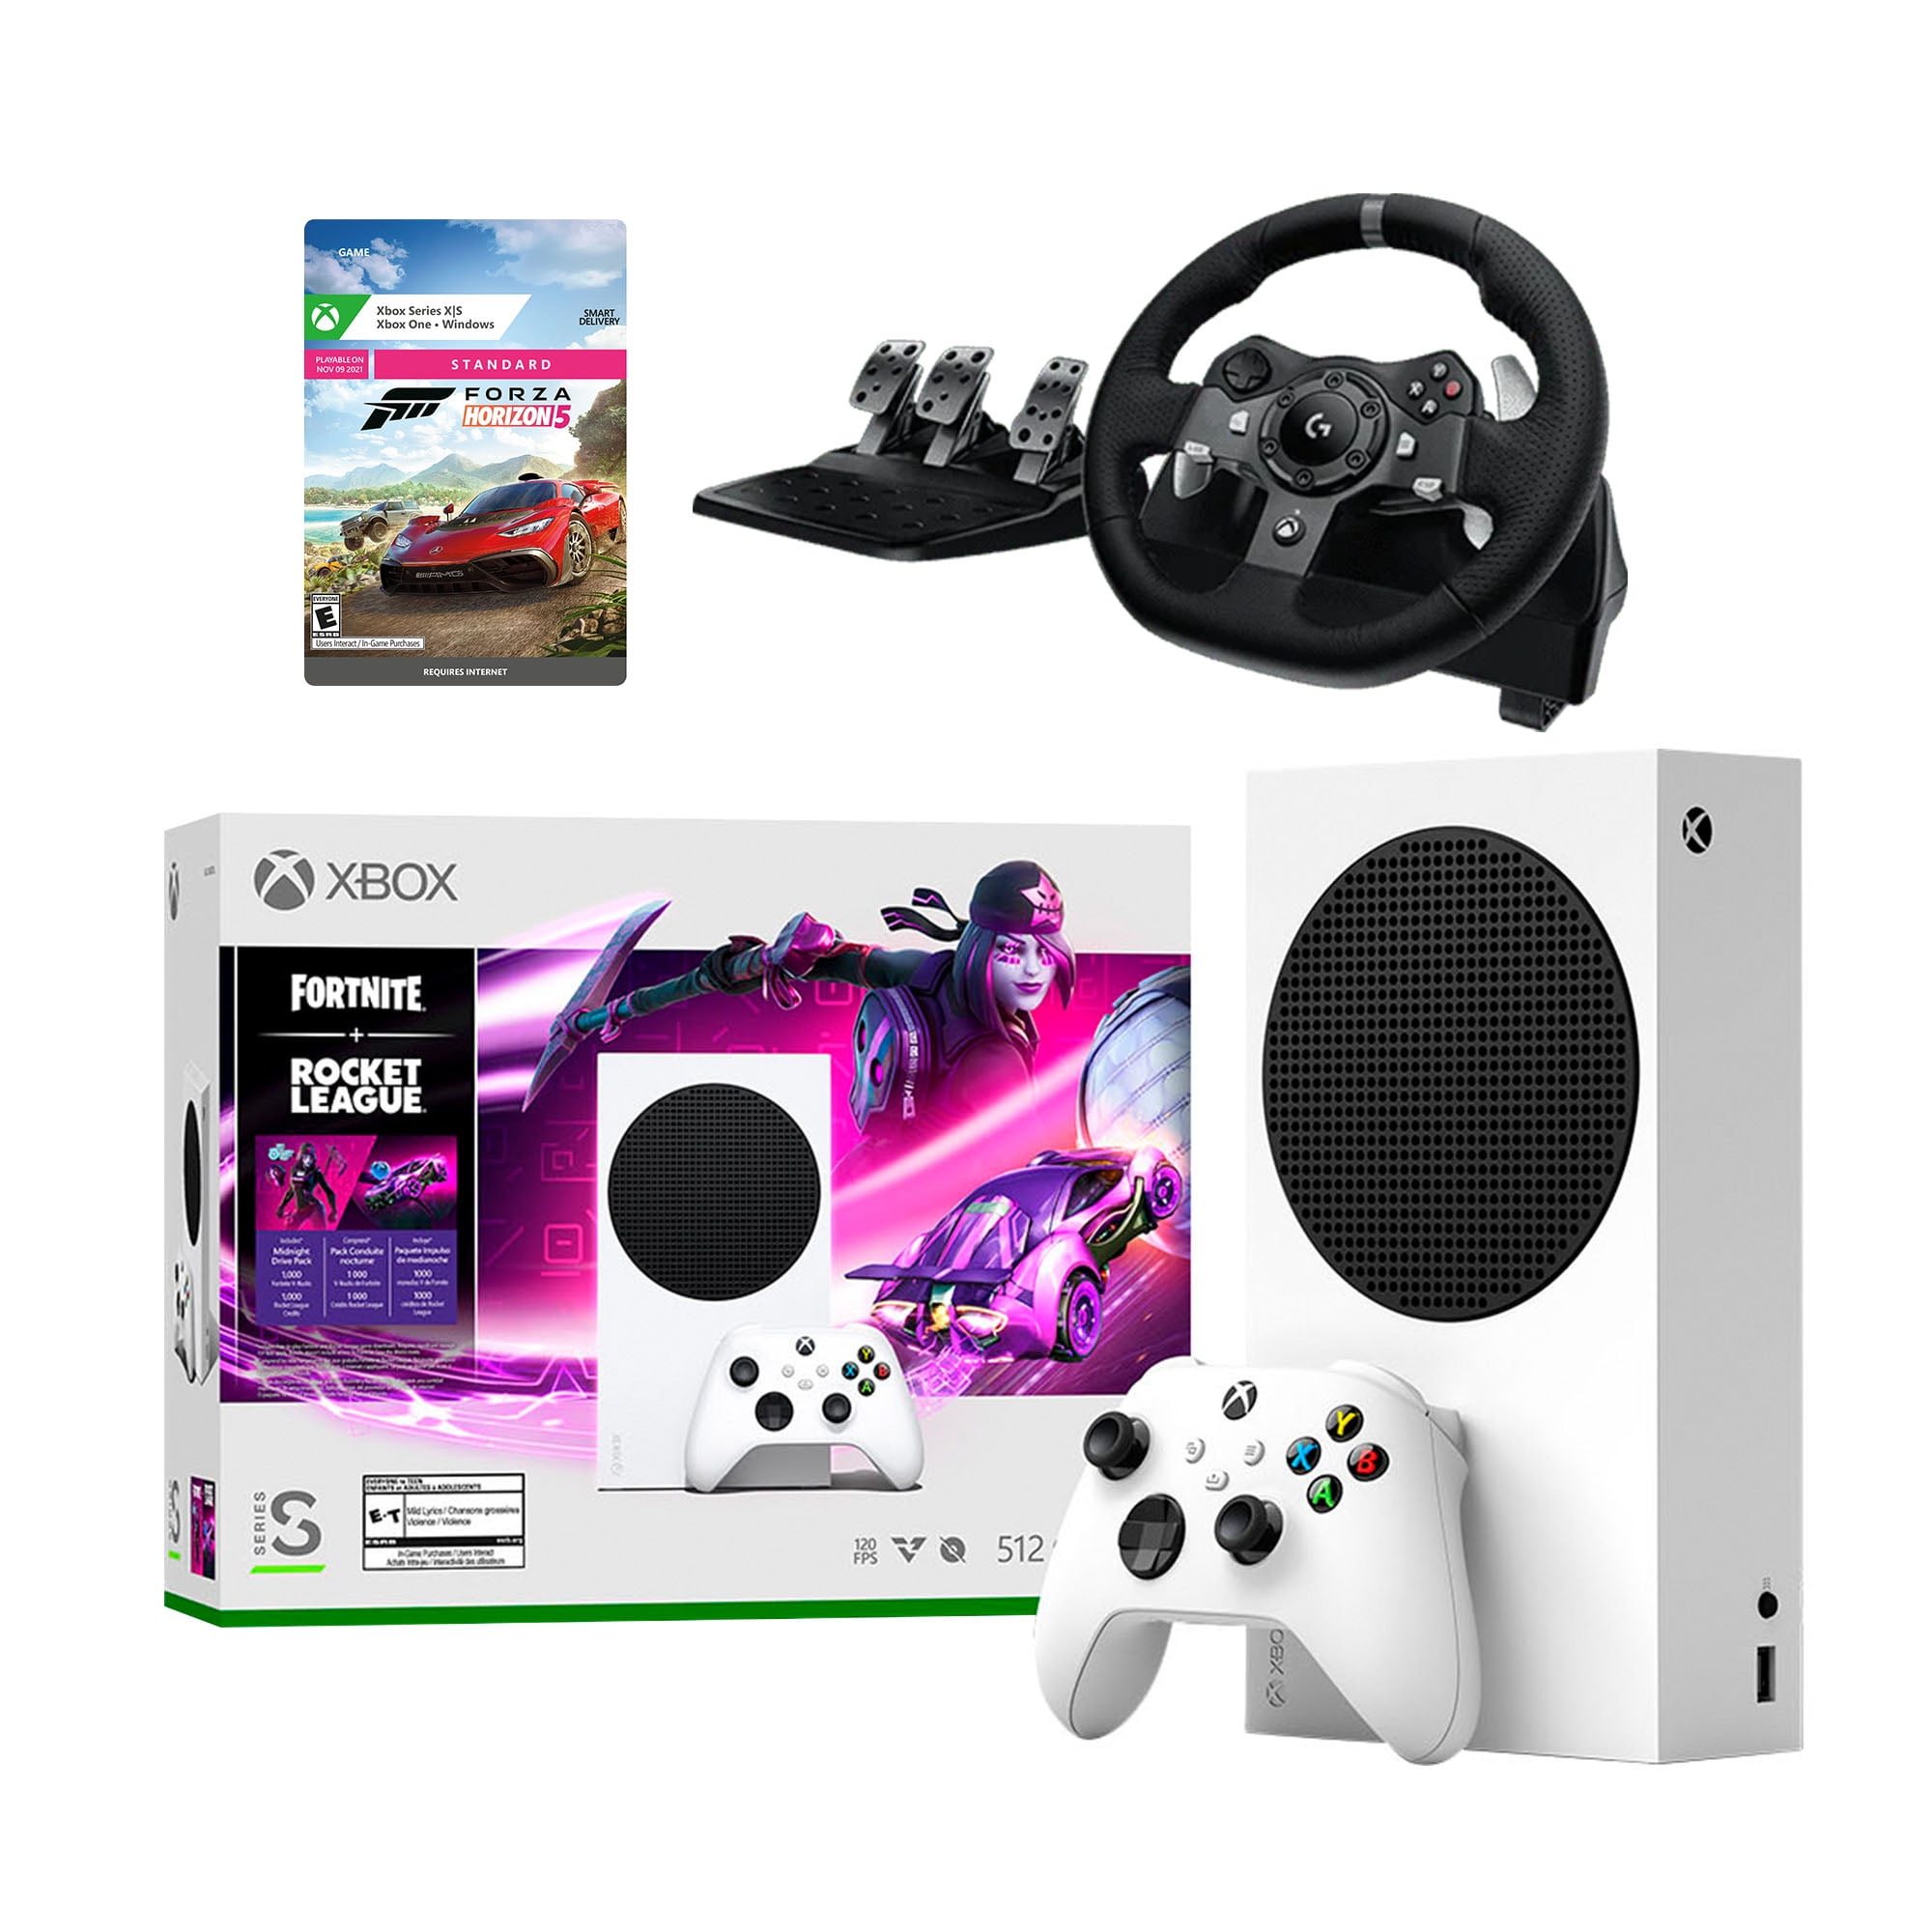 Forza Horizon 5 Premium Edition - Xbox One, Xbox Series X,S [Digital] 